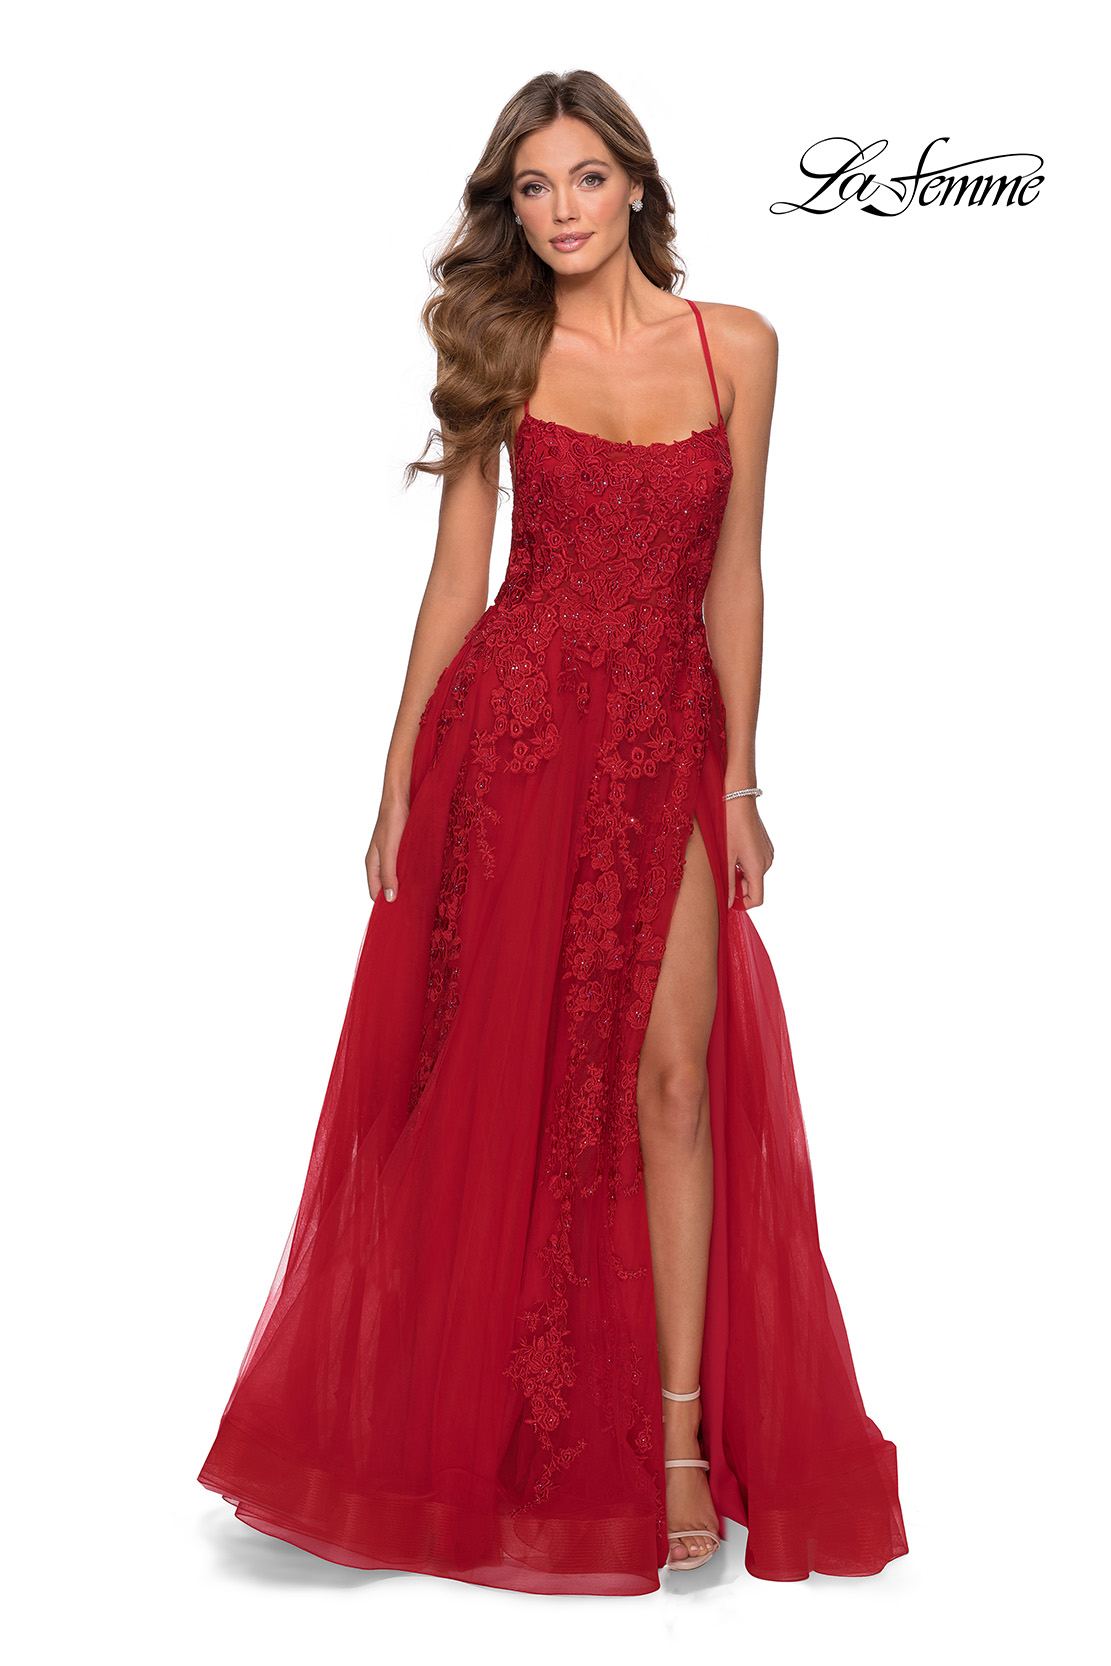 La Femme prom dresses Red